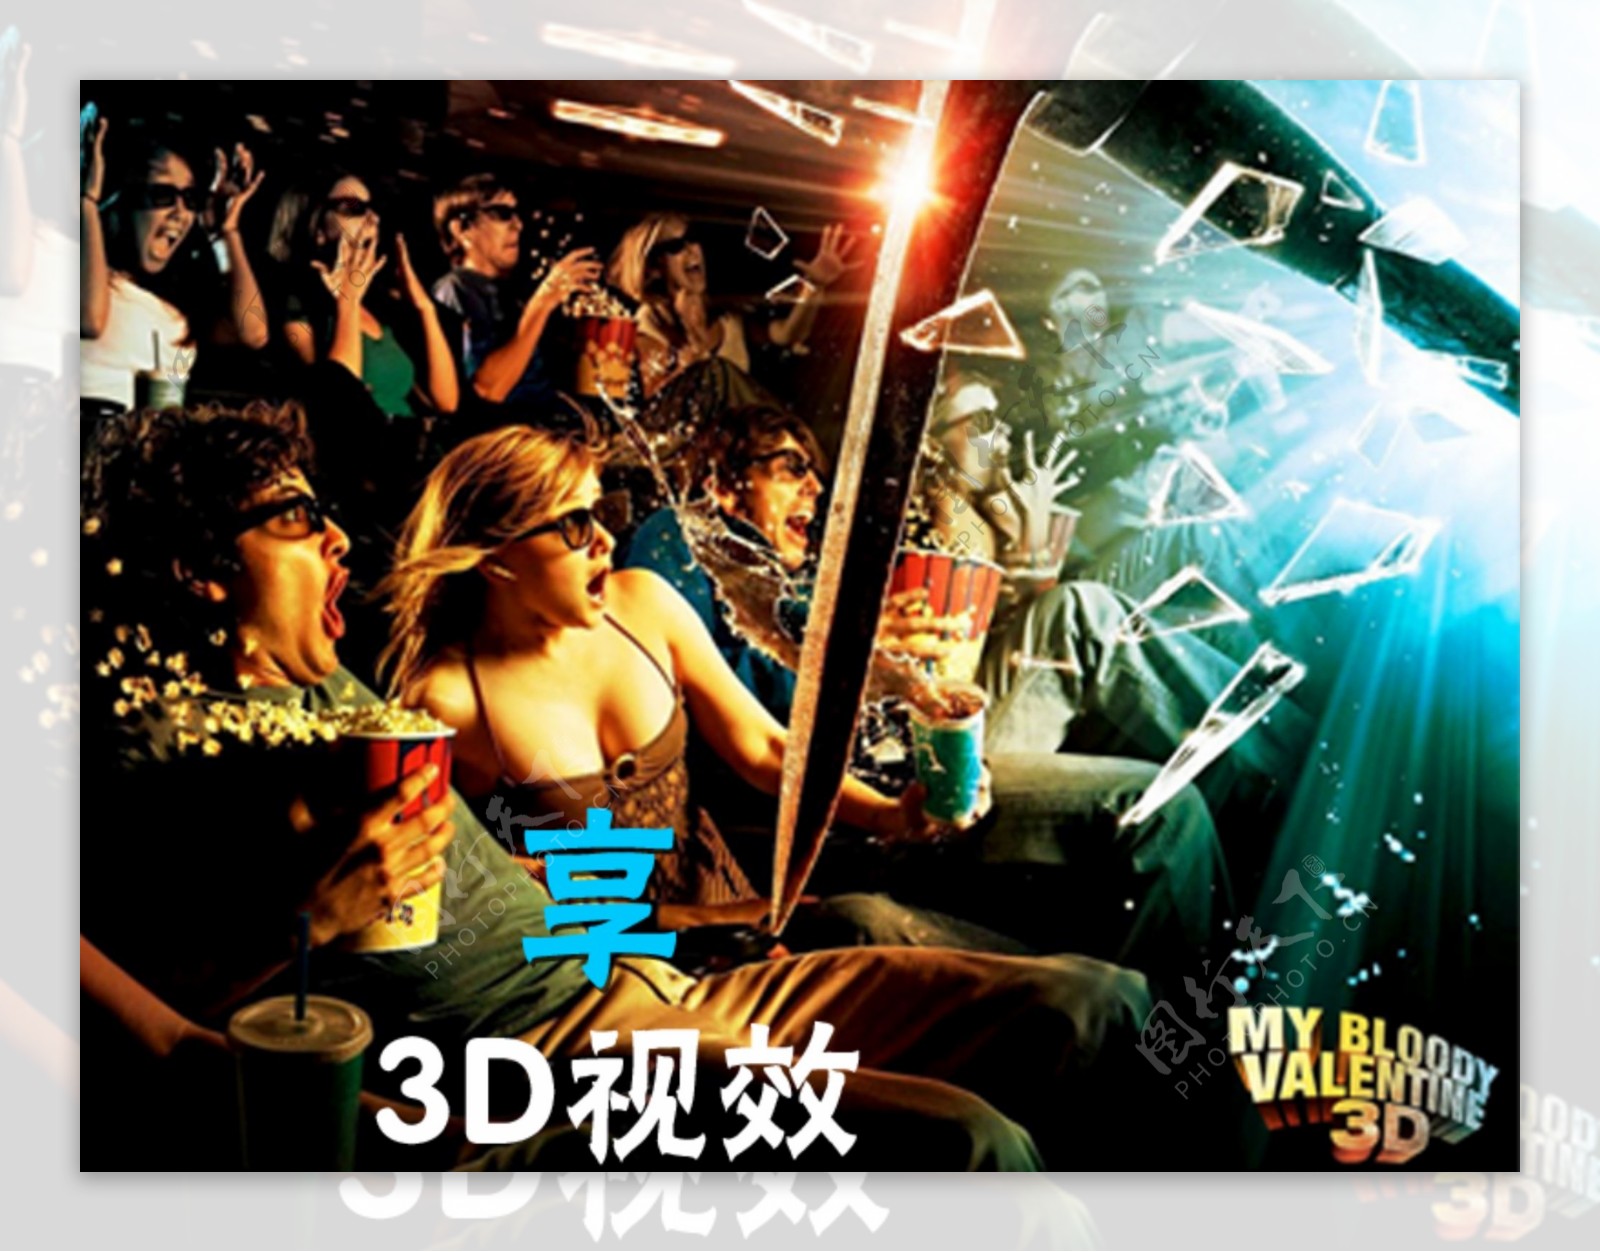 3D电影海报